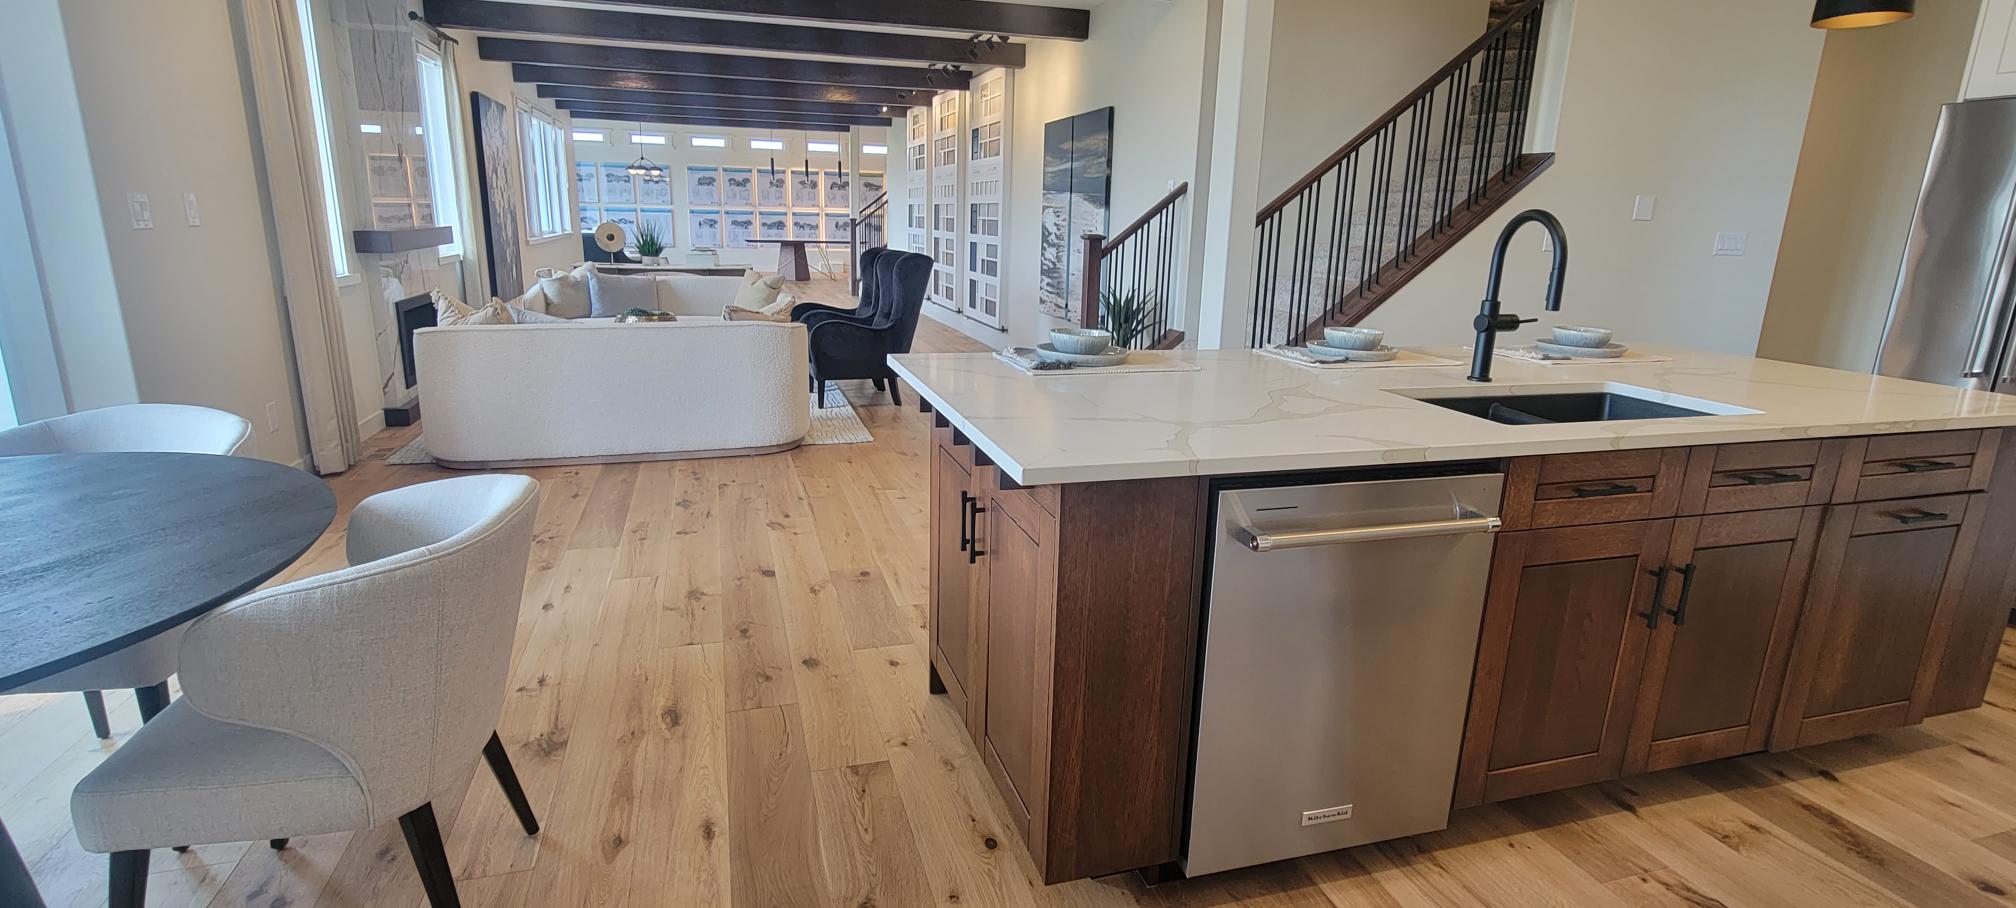 Okanagan Skaha flooring installed in home